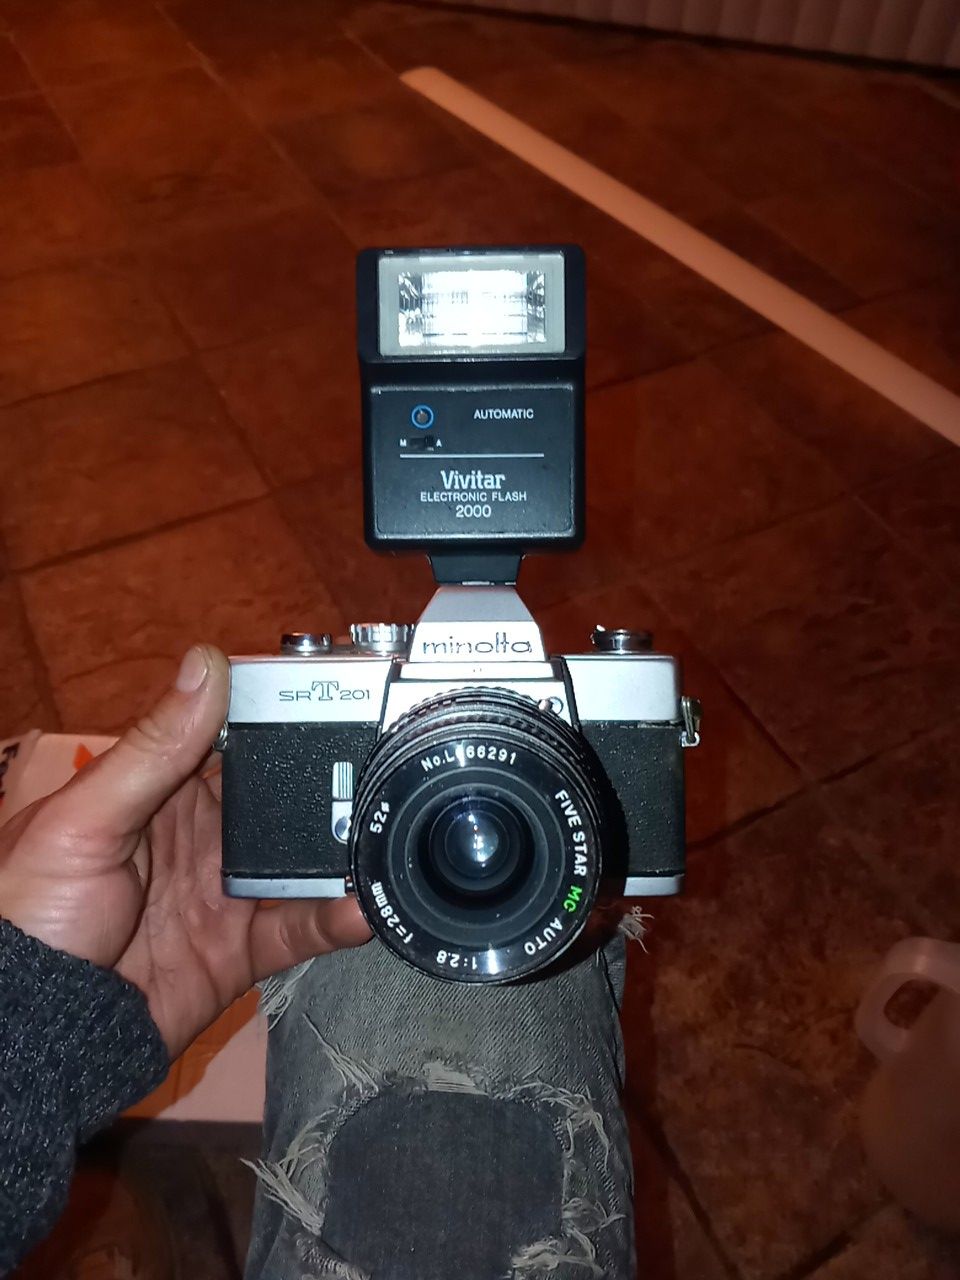 Minolta SRT 201 camera & Vivitar electronic flash